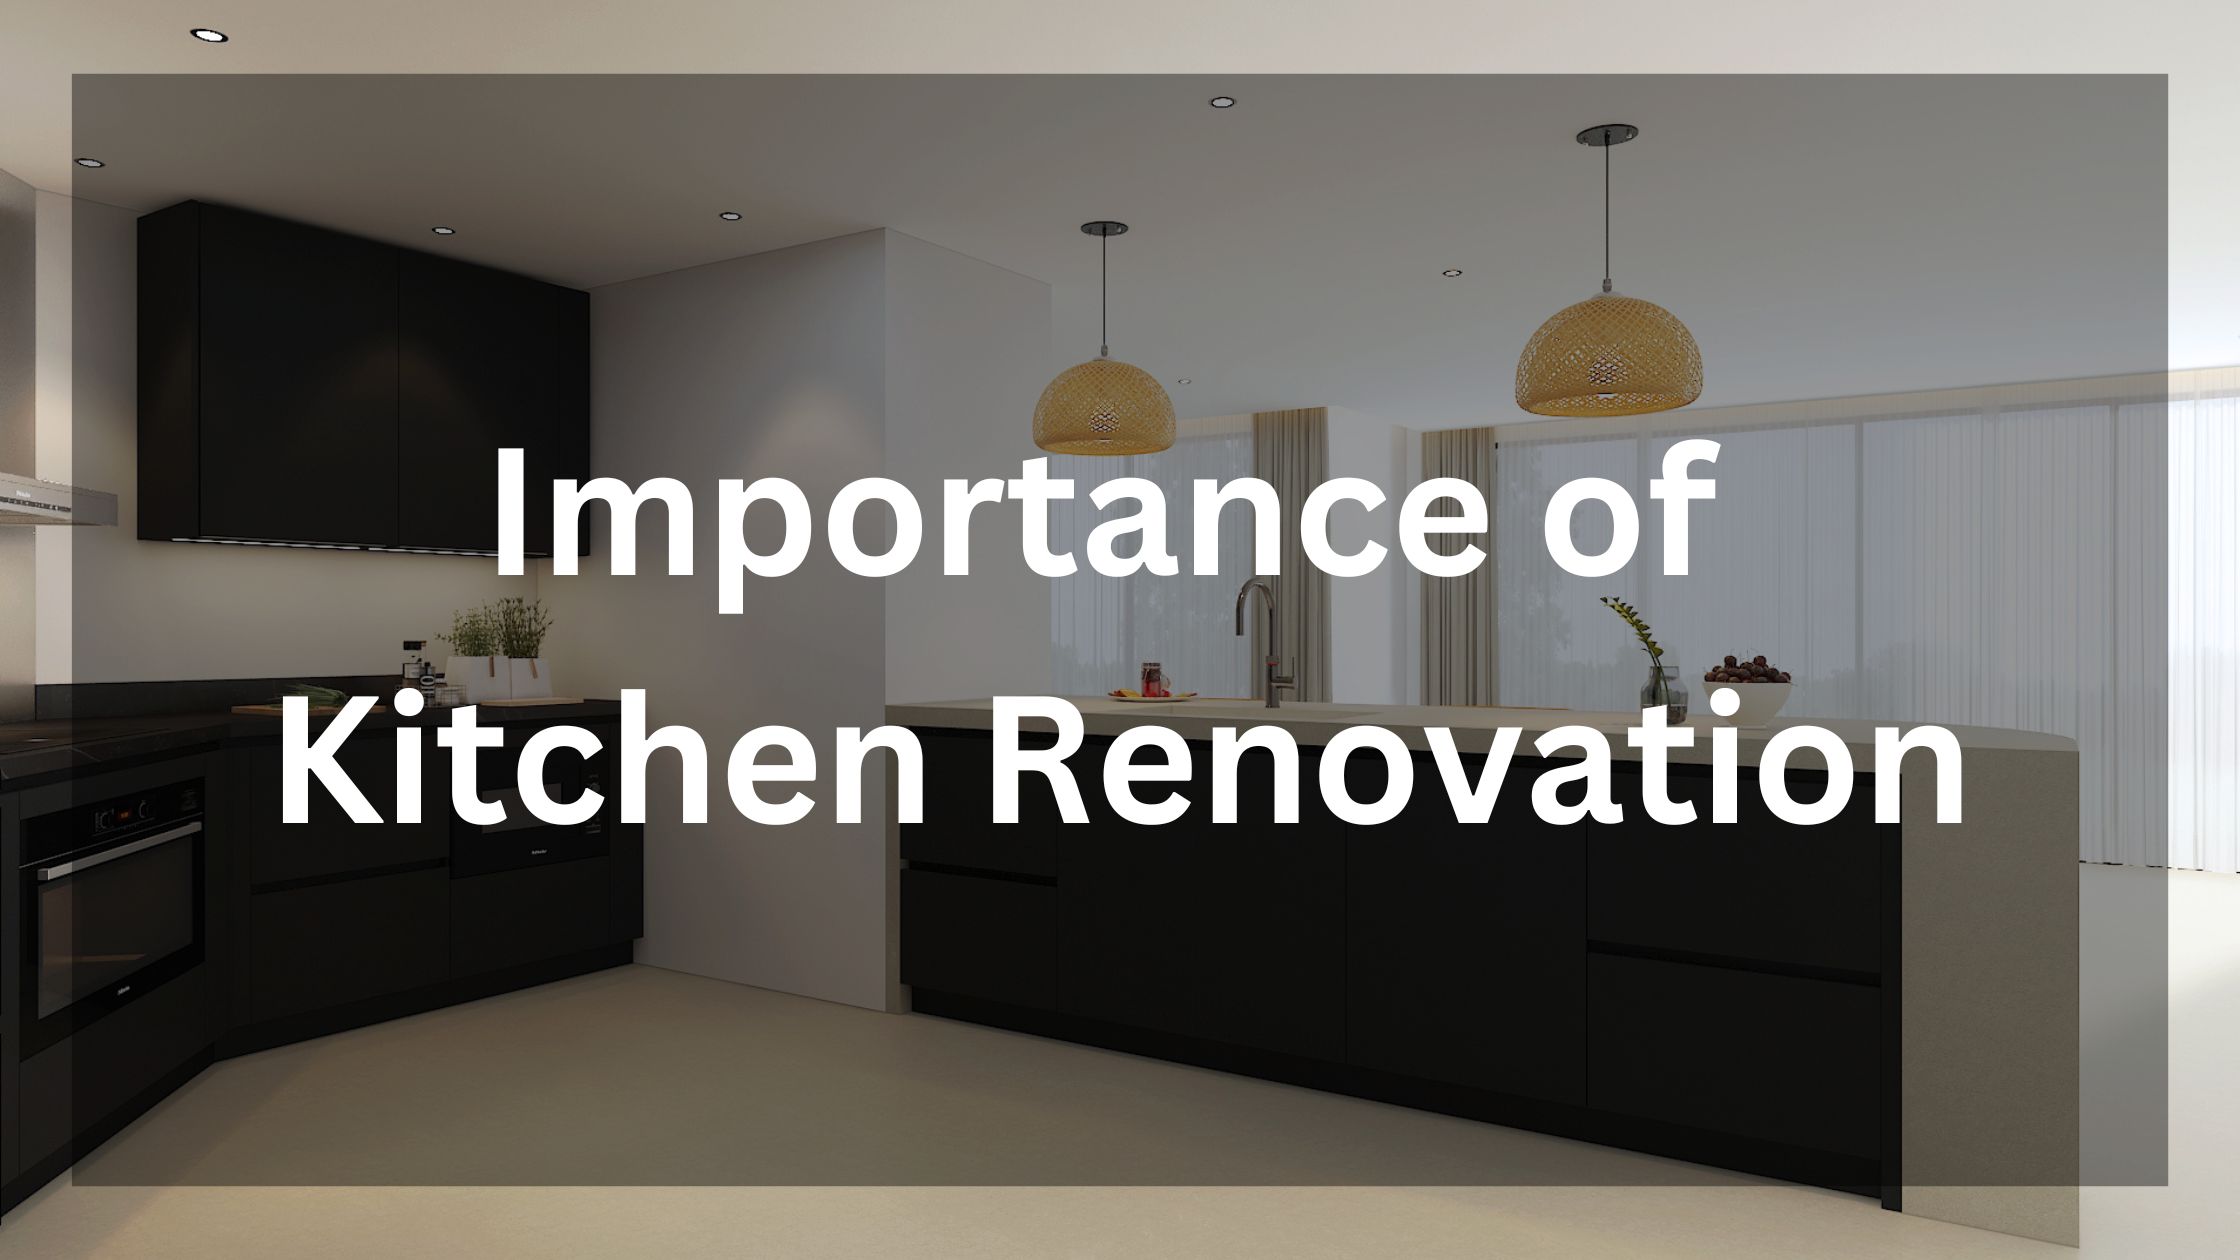 Importance of Kitchen Renovation by AVENTINI